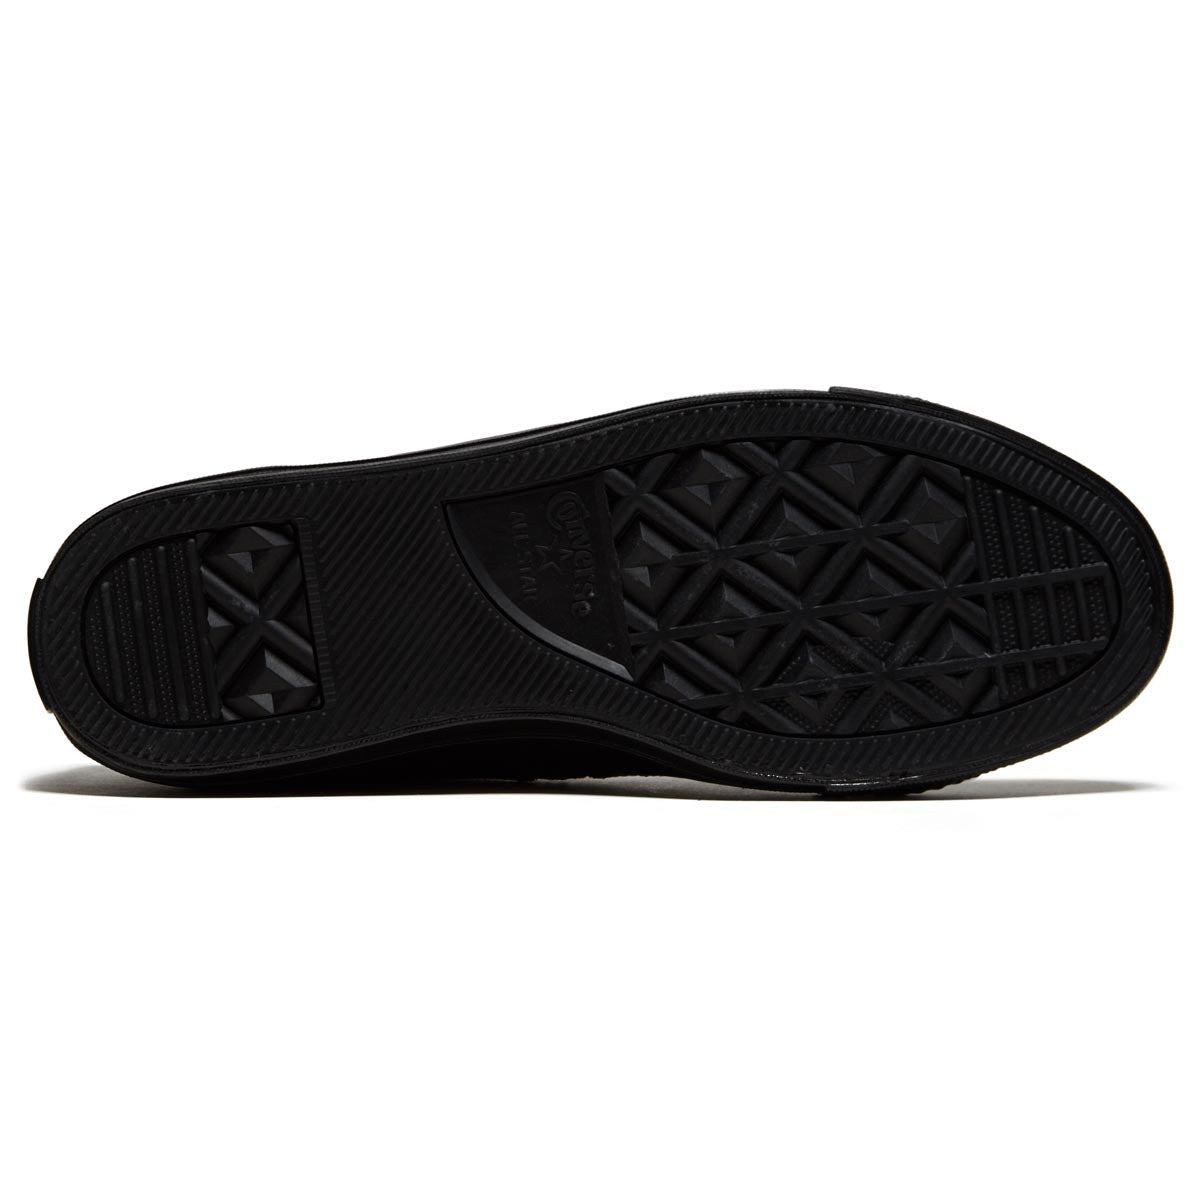 Converse One Star Pro Ox Shoes - Black/Black/Black/White image 4